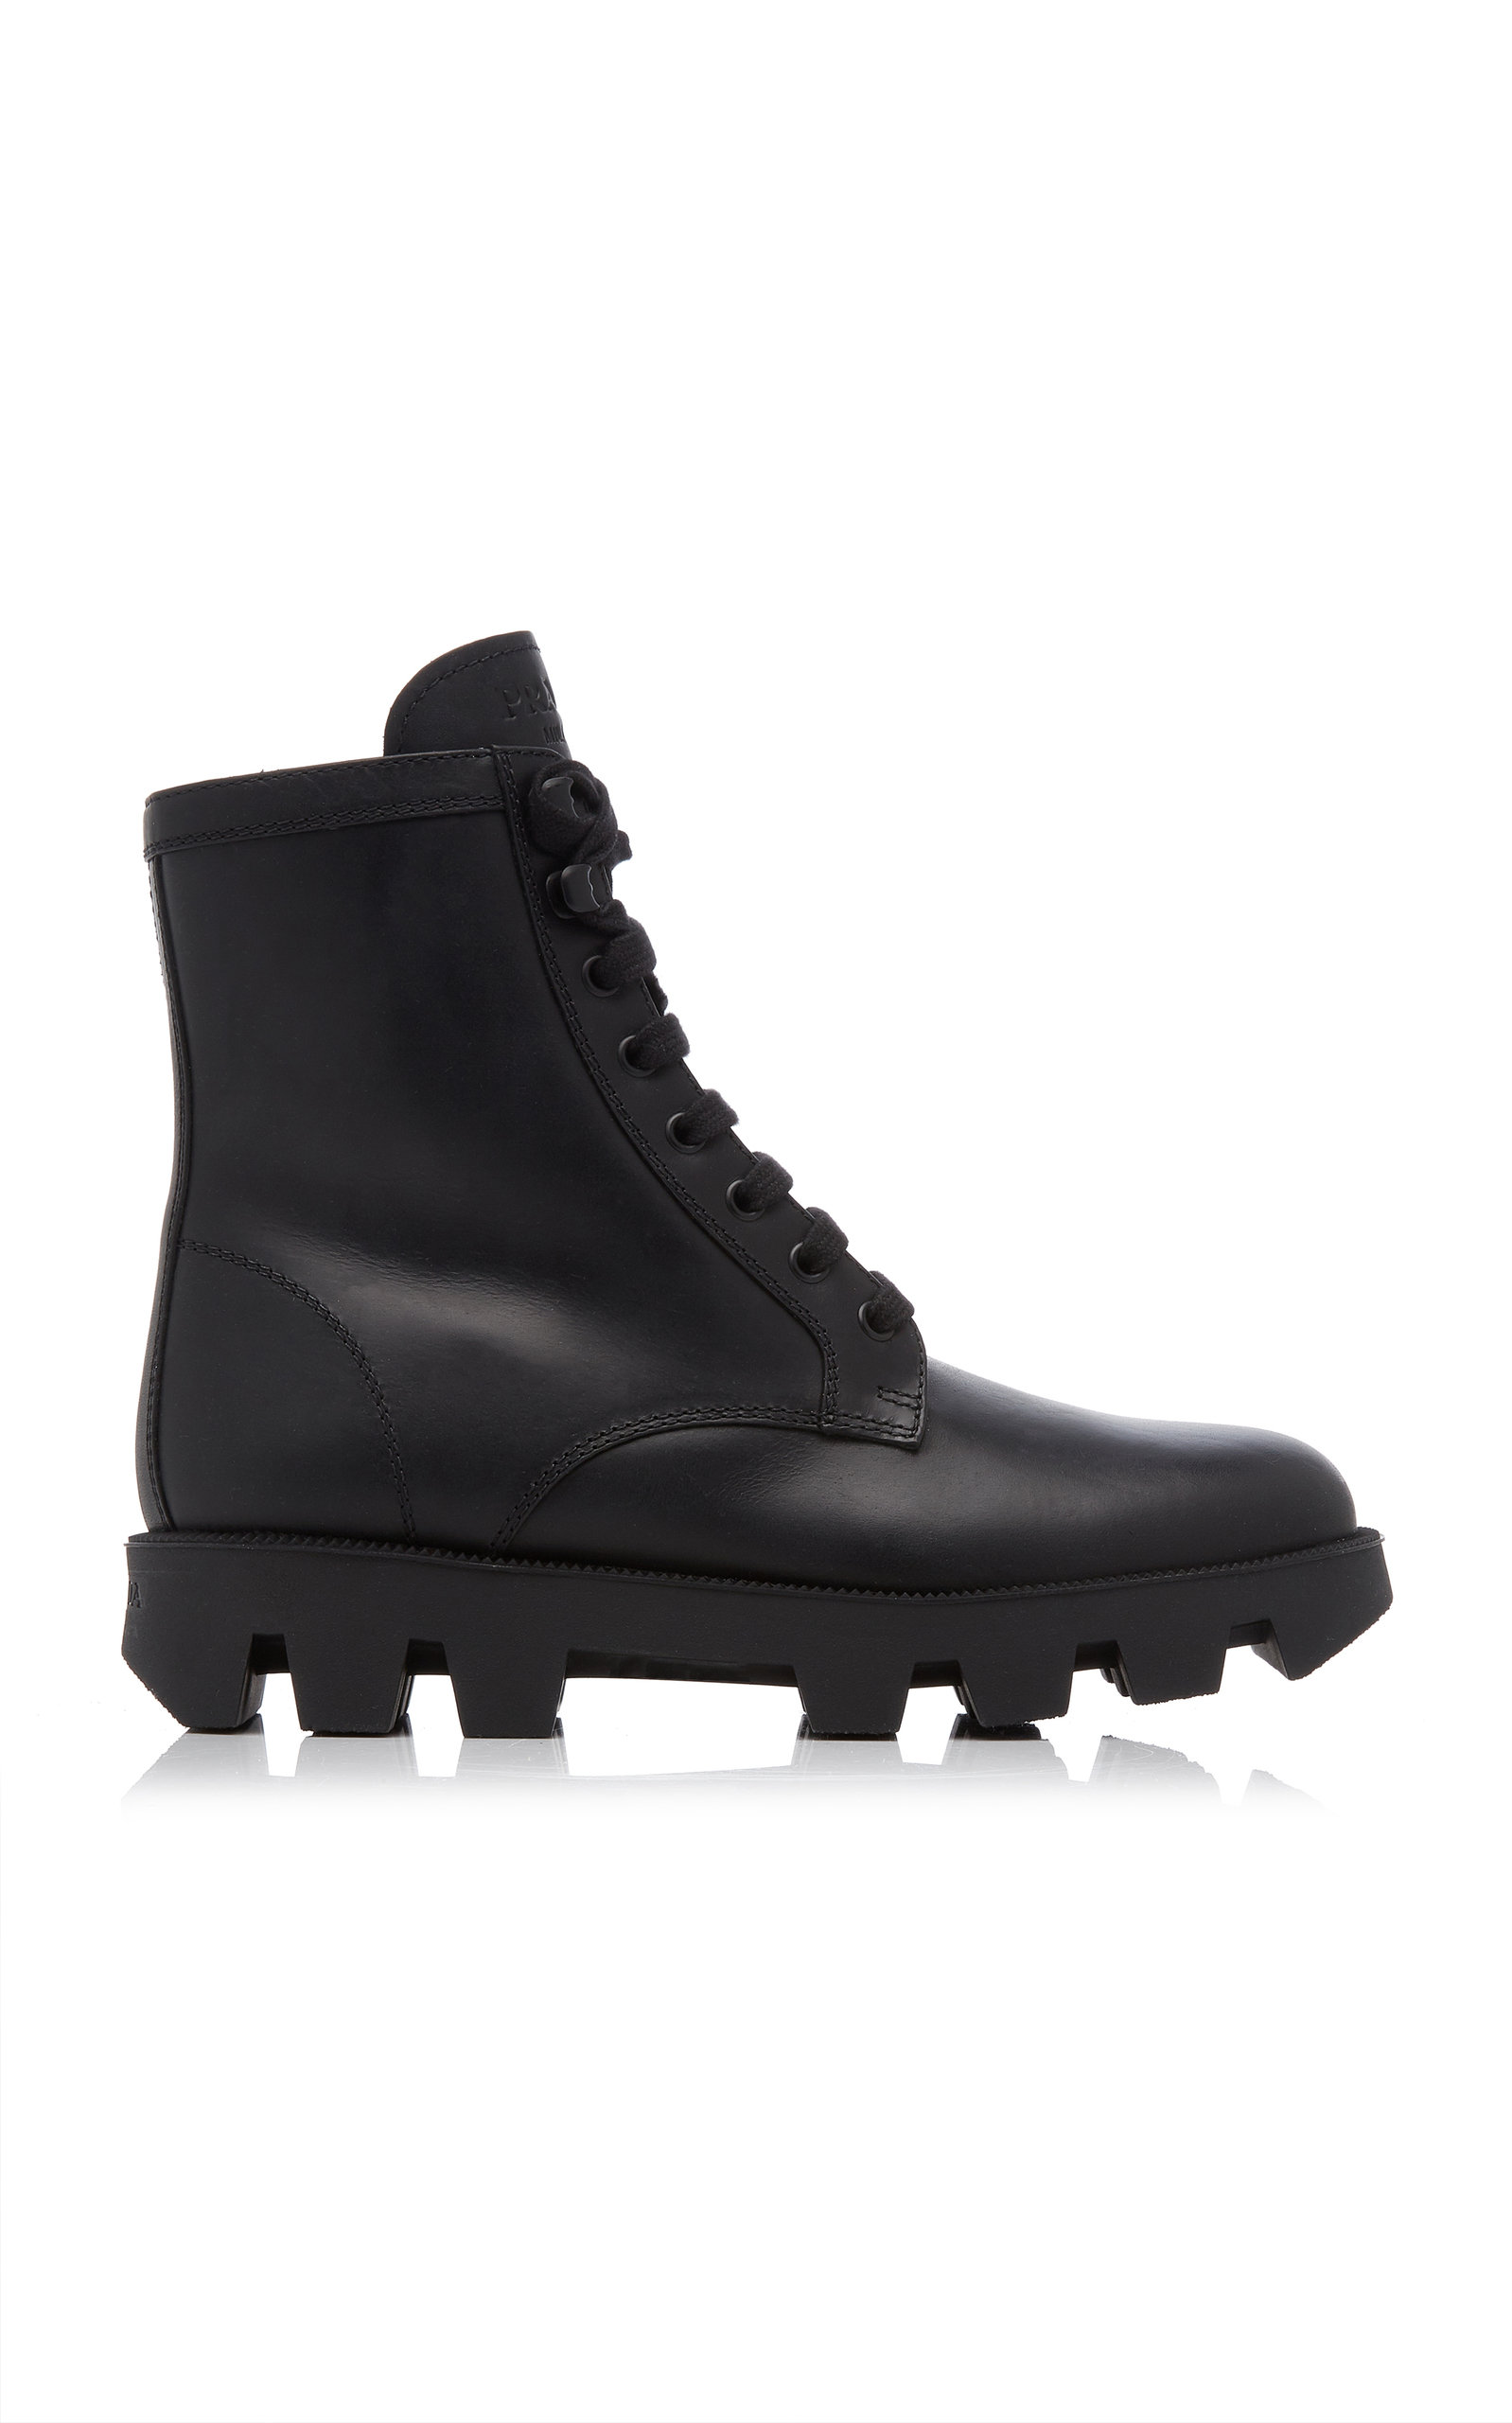 Prada - Women's Leather Lug-Sole Boots - Black - Moda Operandi